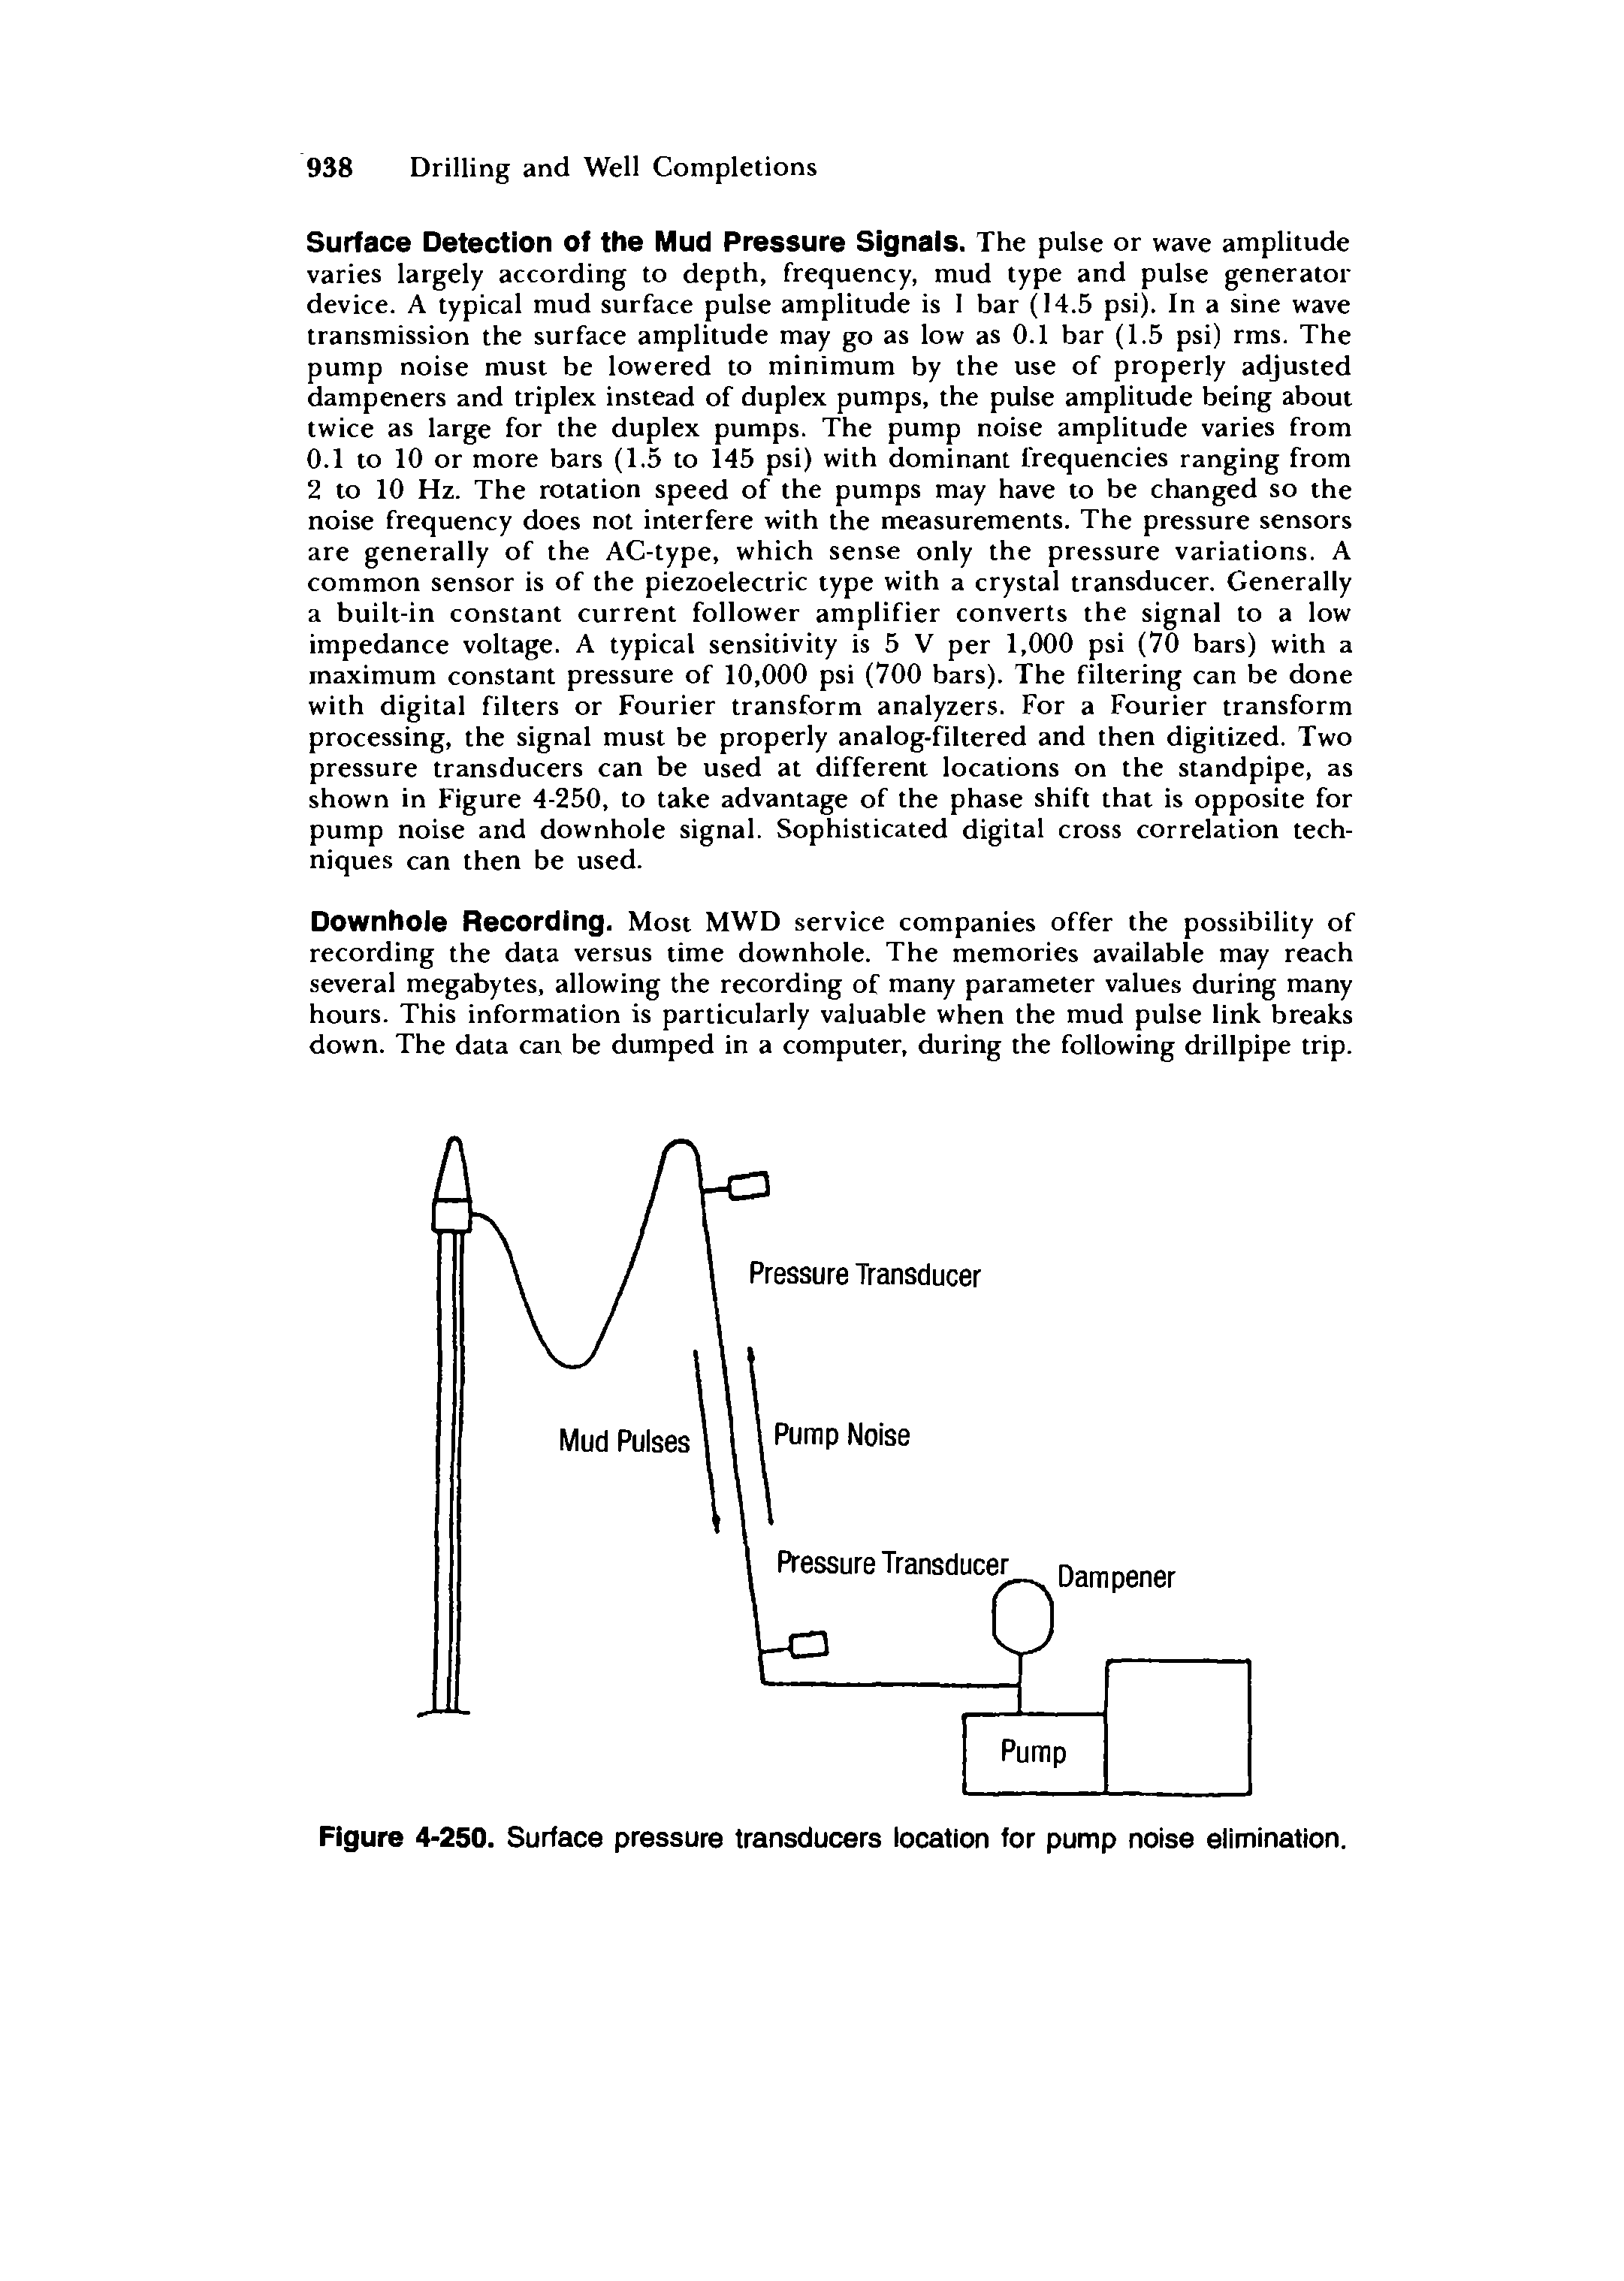 Figure 4-250. Surface pressure transducers location for pump noise elimination.